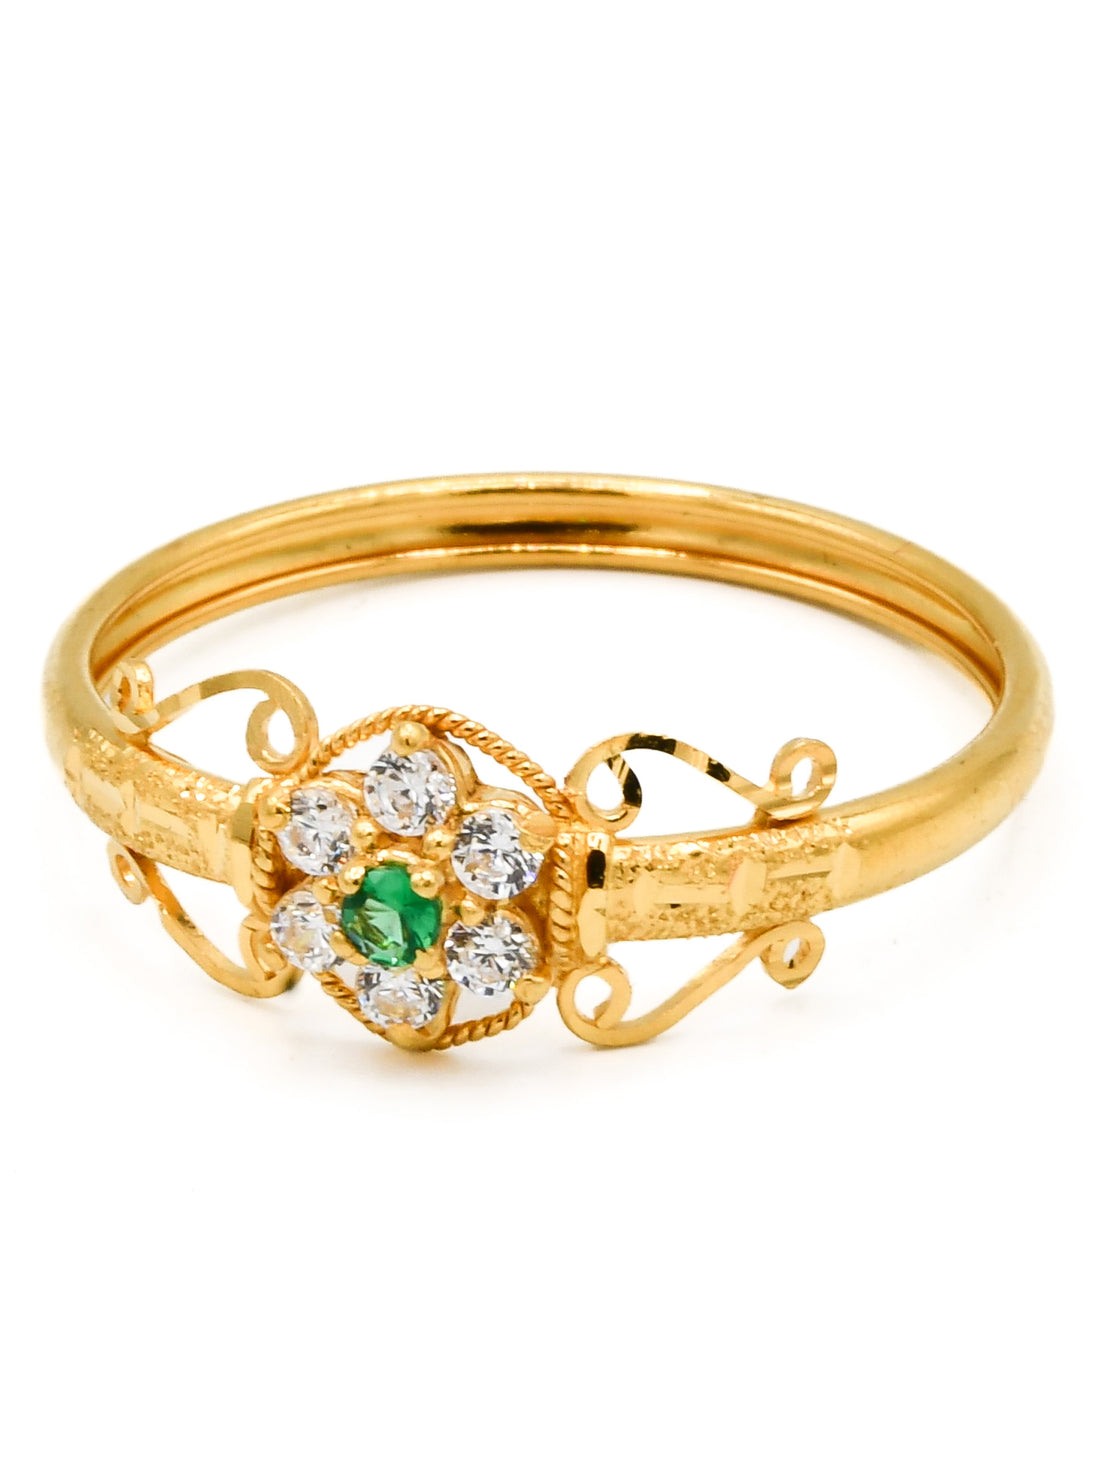 22ct Gold Green CZ Ladies Ring - Roop Darshan